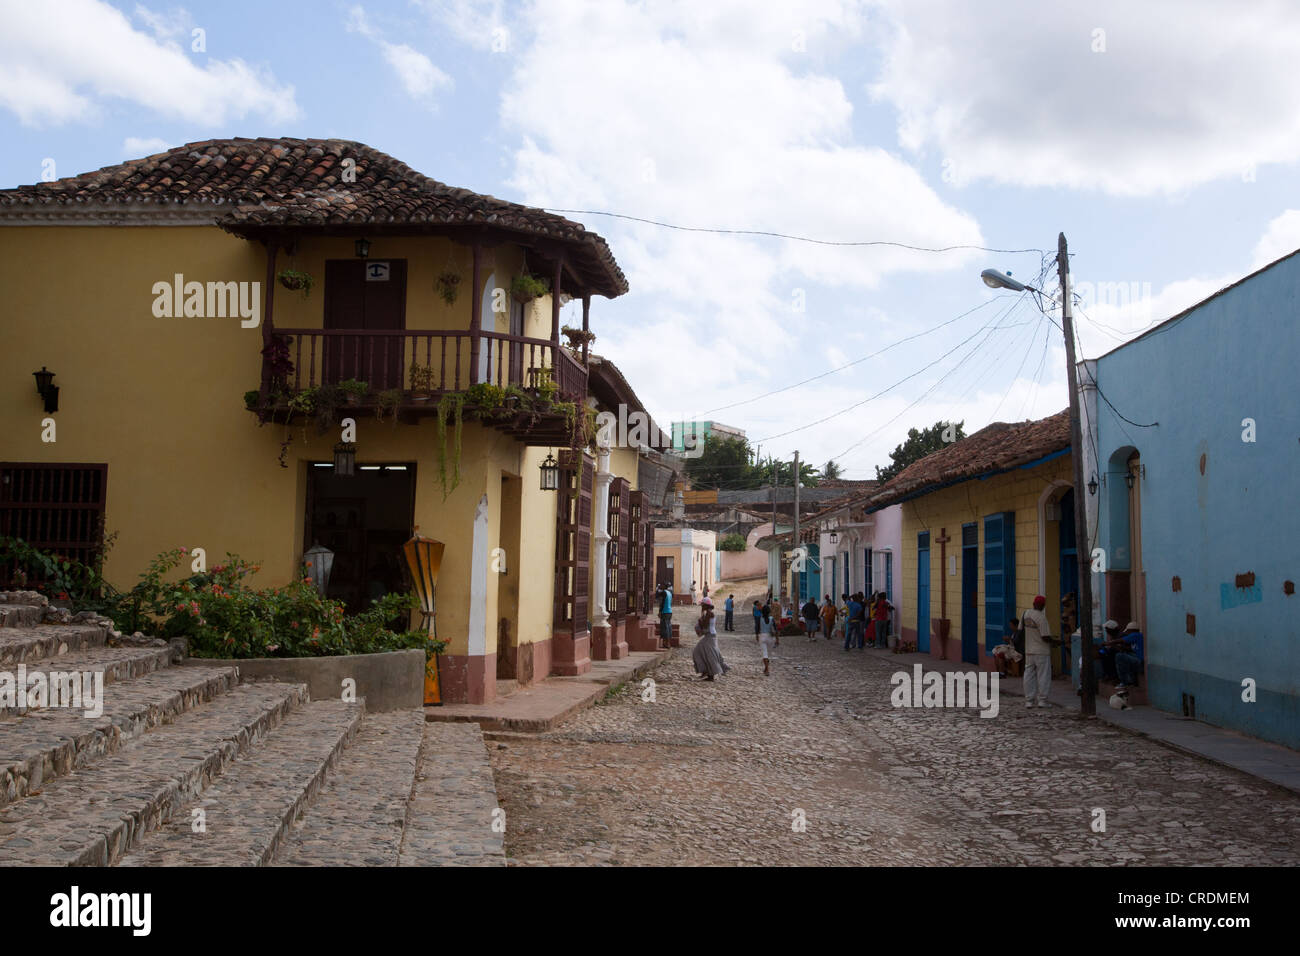 Street scene Trinidad, Cuba Stock Photo